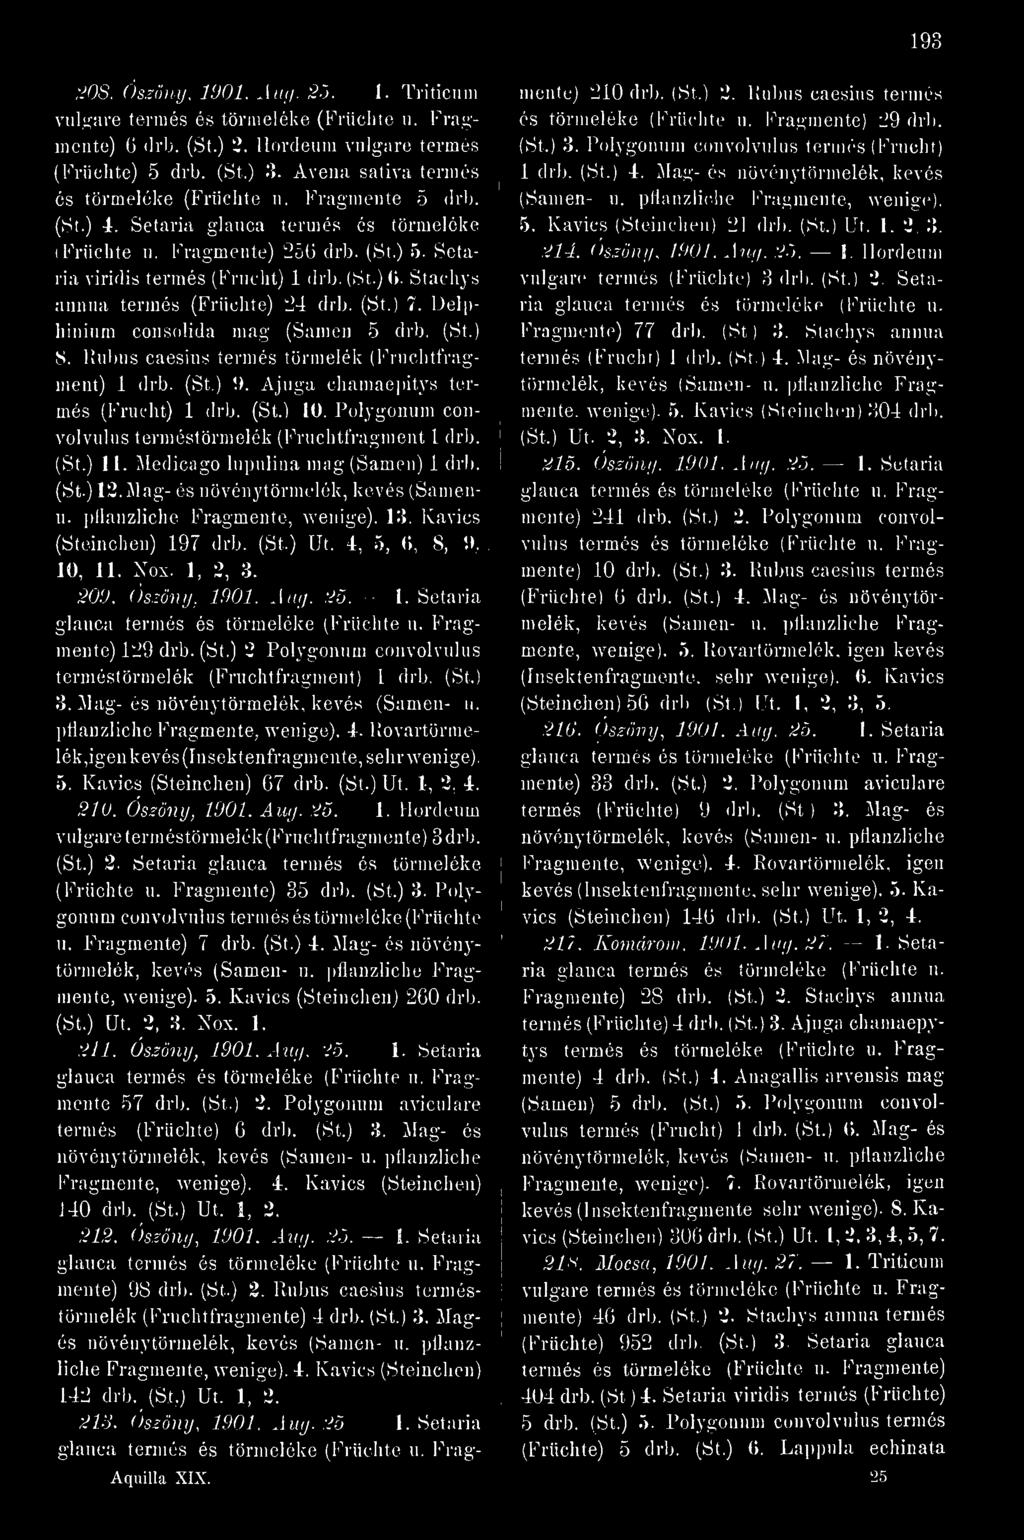 Mag- és növénytörmclék, kevés (Sanienu. i)tiaiizliche Fragmente, wenige). 13. Kavics (Steinchen) 197 drb. (St.) Ut. 4, 5, 0, 8, 9,, 10, 11. Nox. 1, 2, 3. 2W. (')szünij, 1901. Aiuj. 25. 1. Setaria glauca 129 drb.